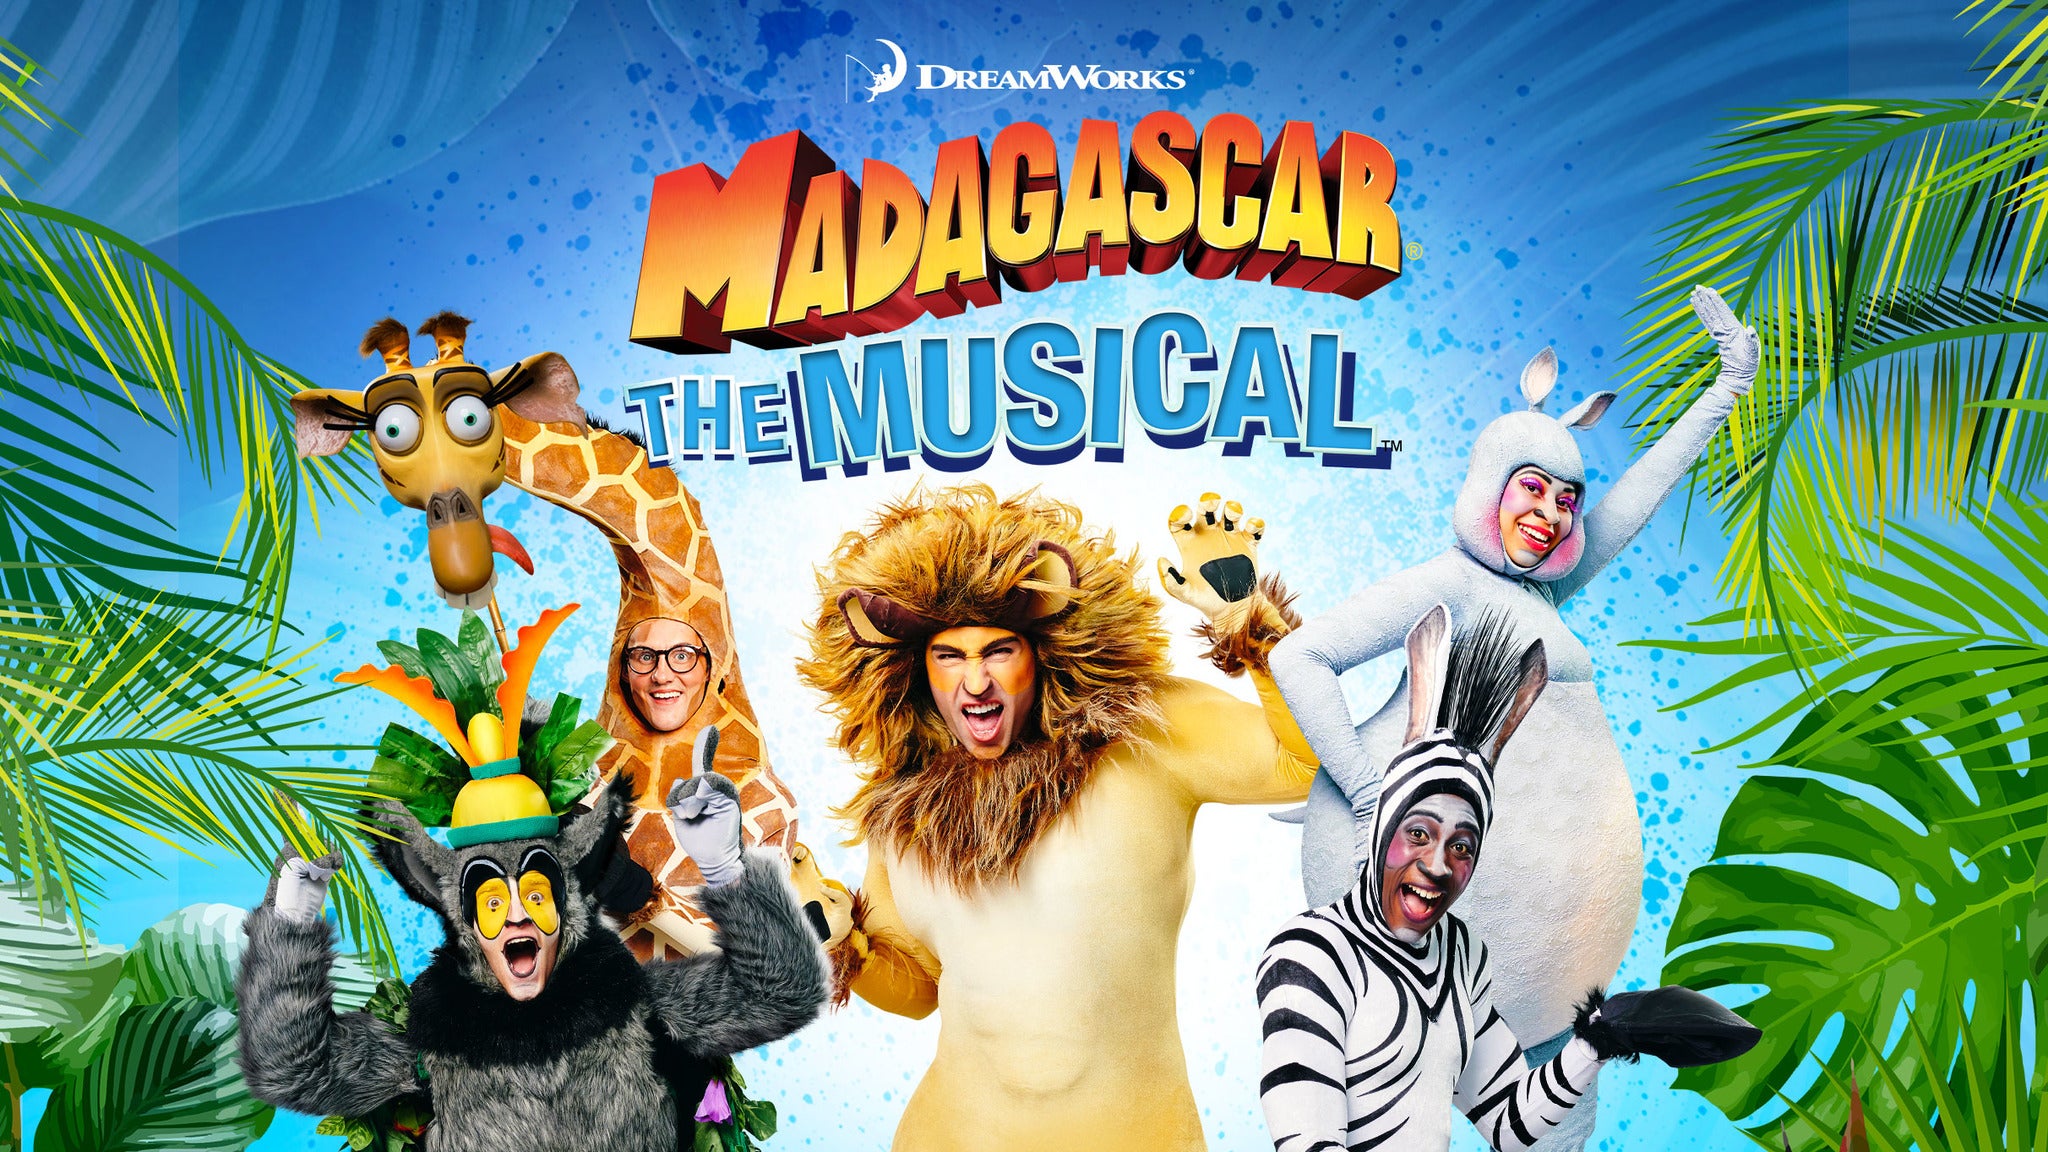 Madagascar - The Musical at Music Hall Kansas City - Kansas City, MO 64105